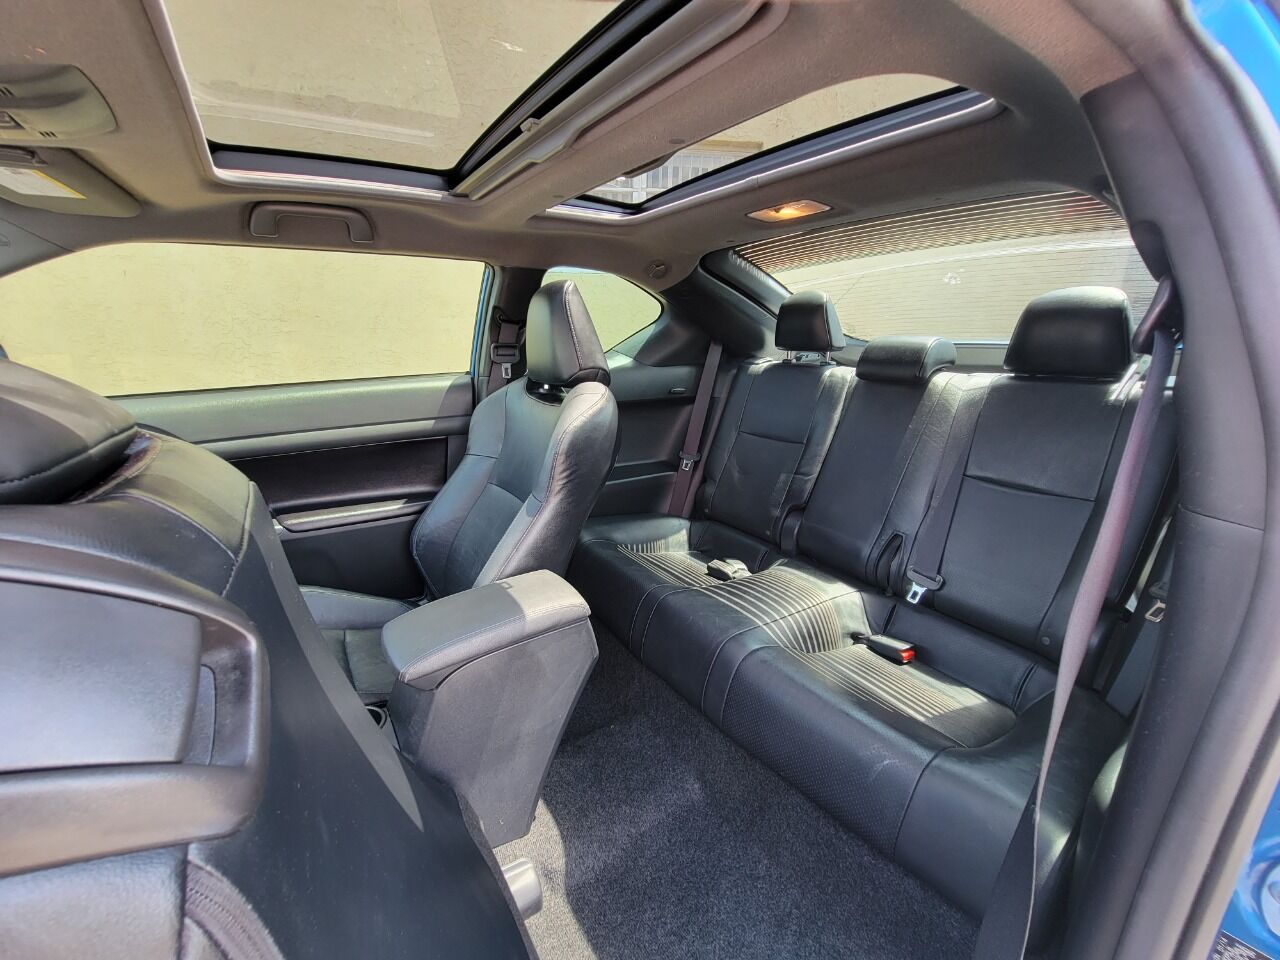 2014 TOYOTA SCION tC Hatchback - $18,999